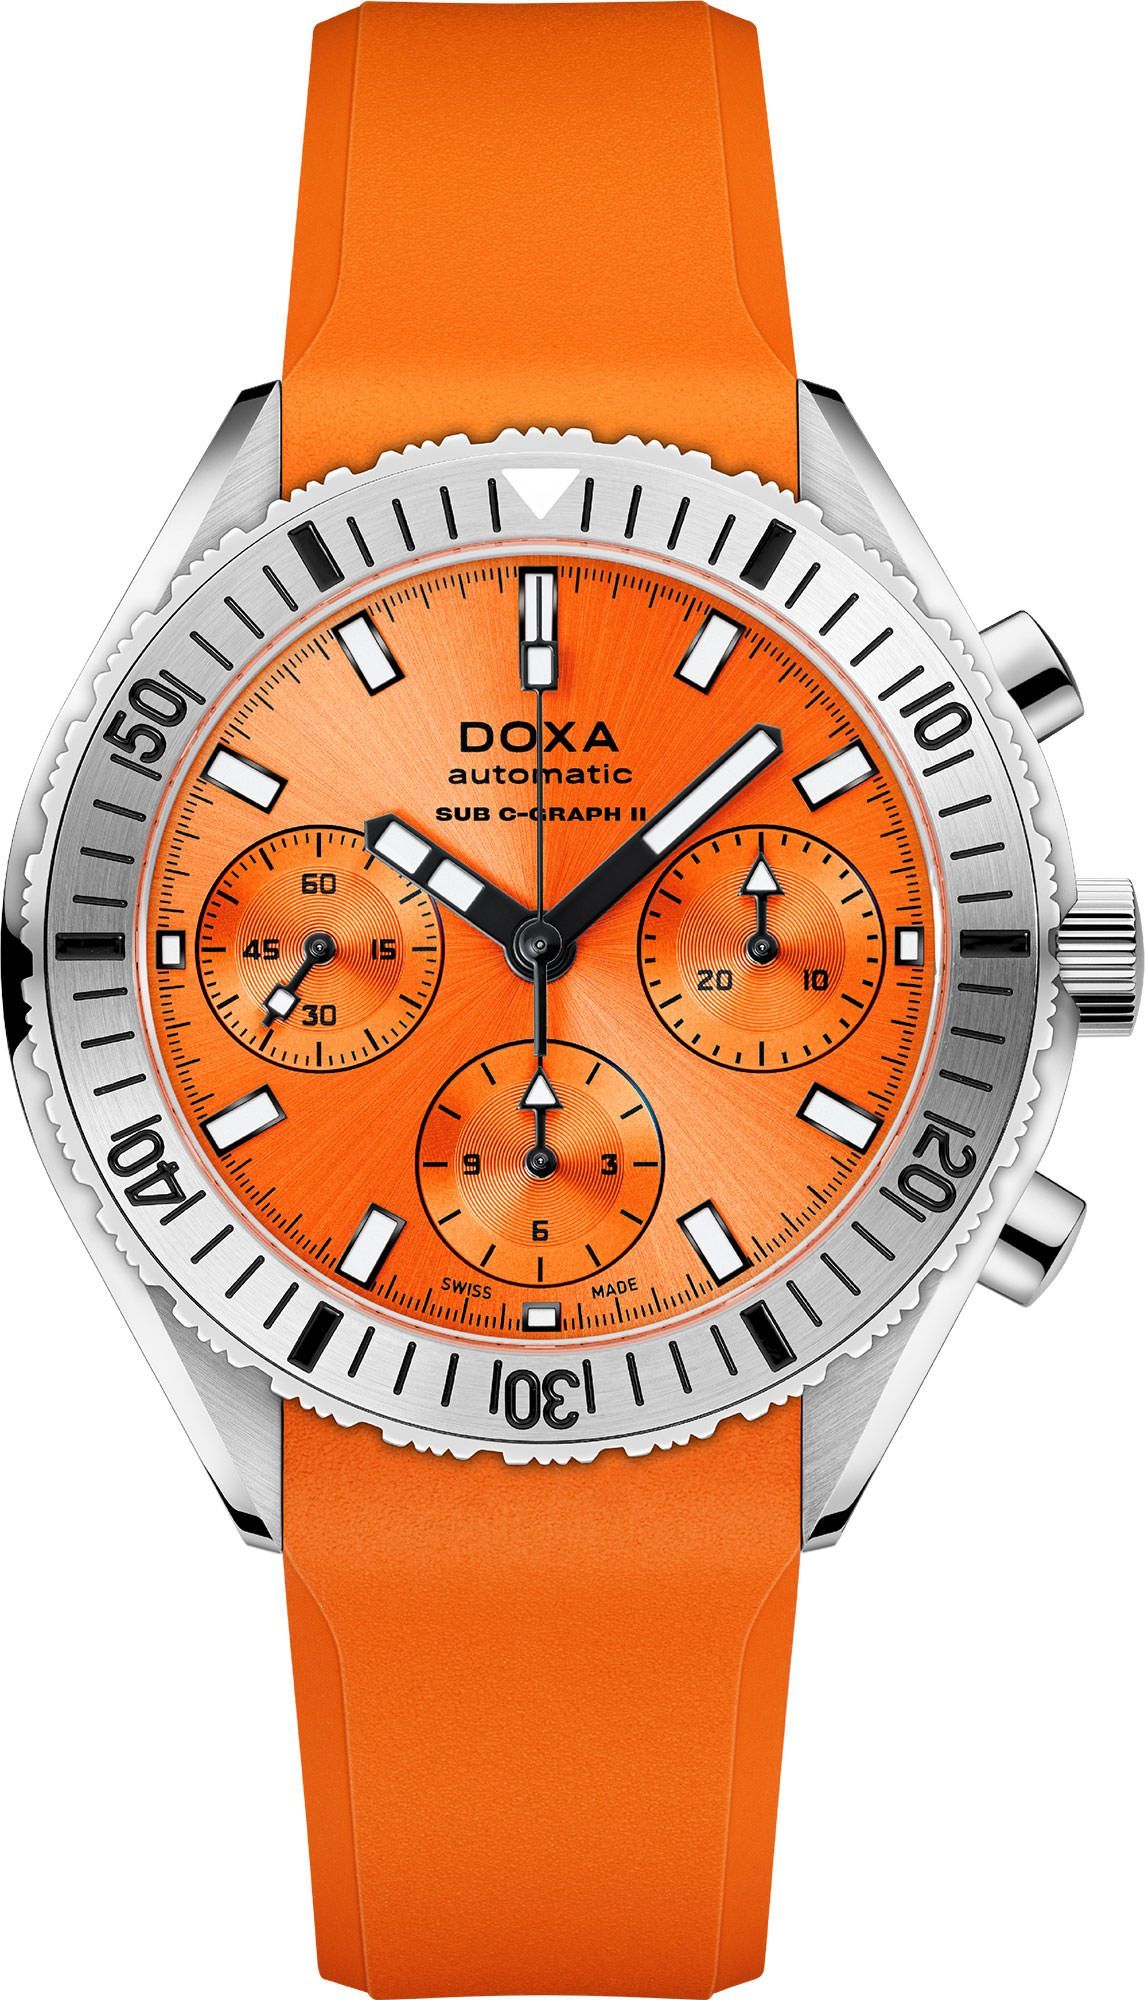 Doxa SUB 200 C-GRAPH II Professional Orange Dial 42 mm Automatic Watch For Men - 1